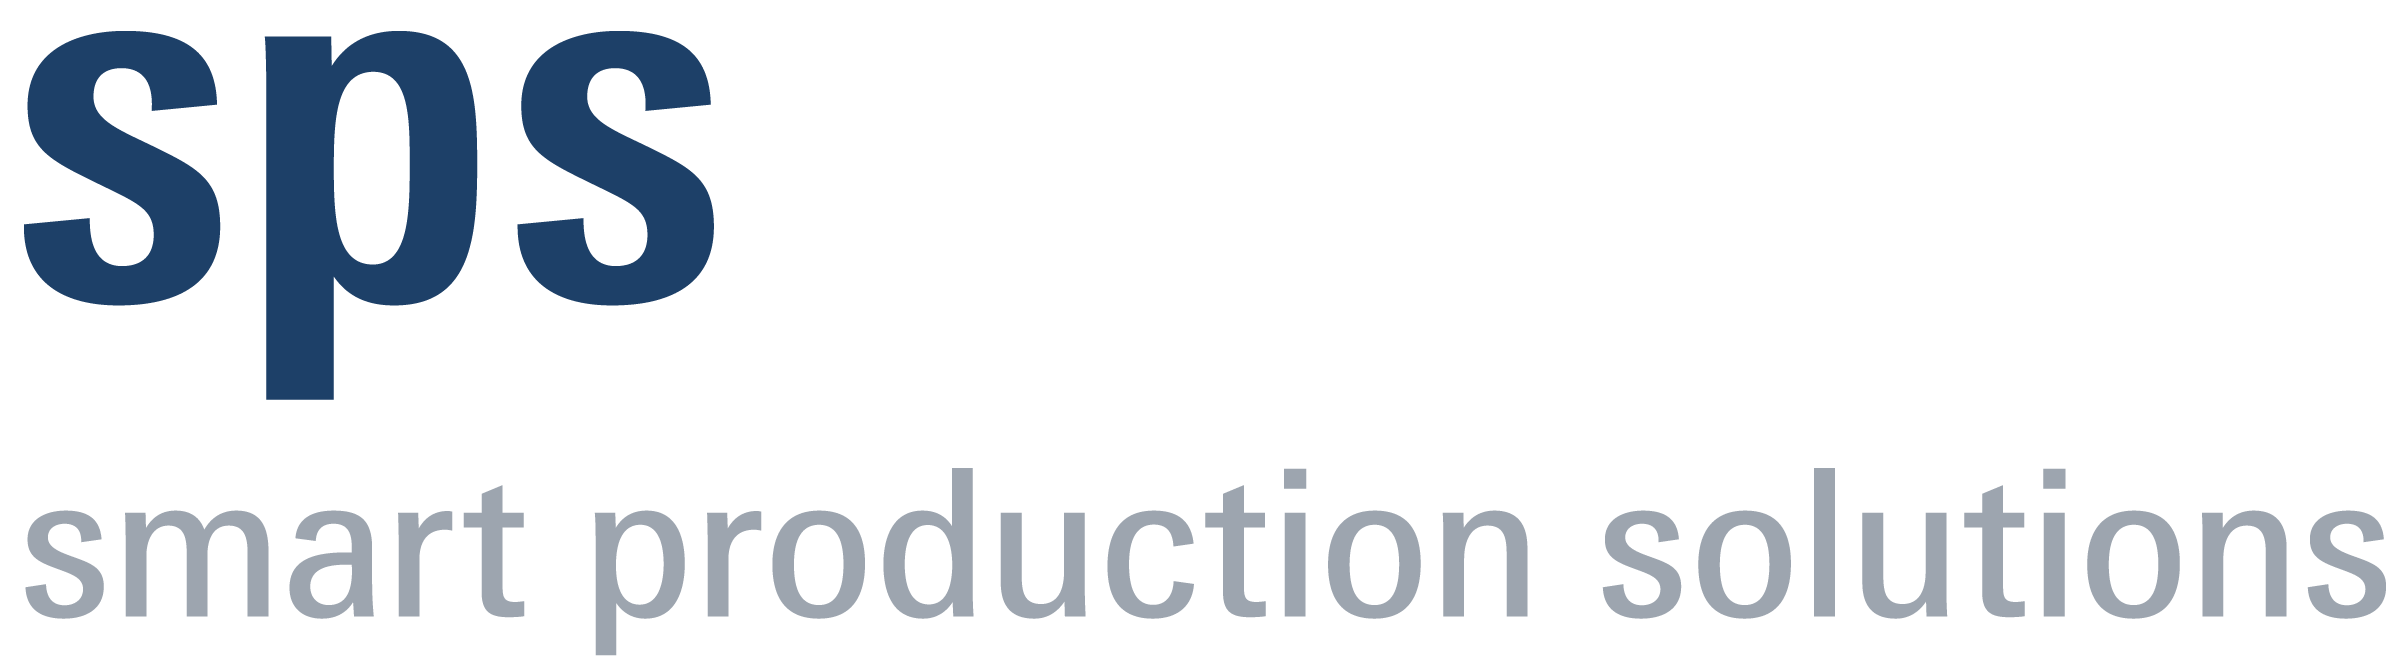 Products solutions. SPS смарт. SPS logo. SPS 2023. Нюрнберг 2023 дистрибьютор.